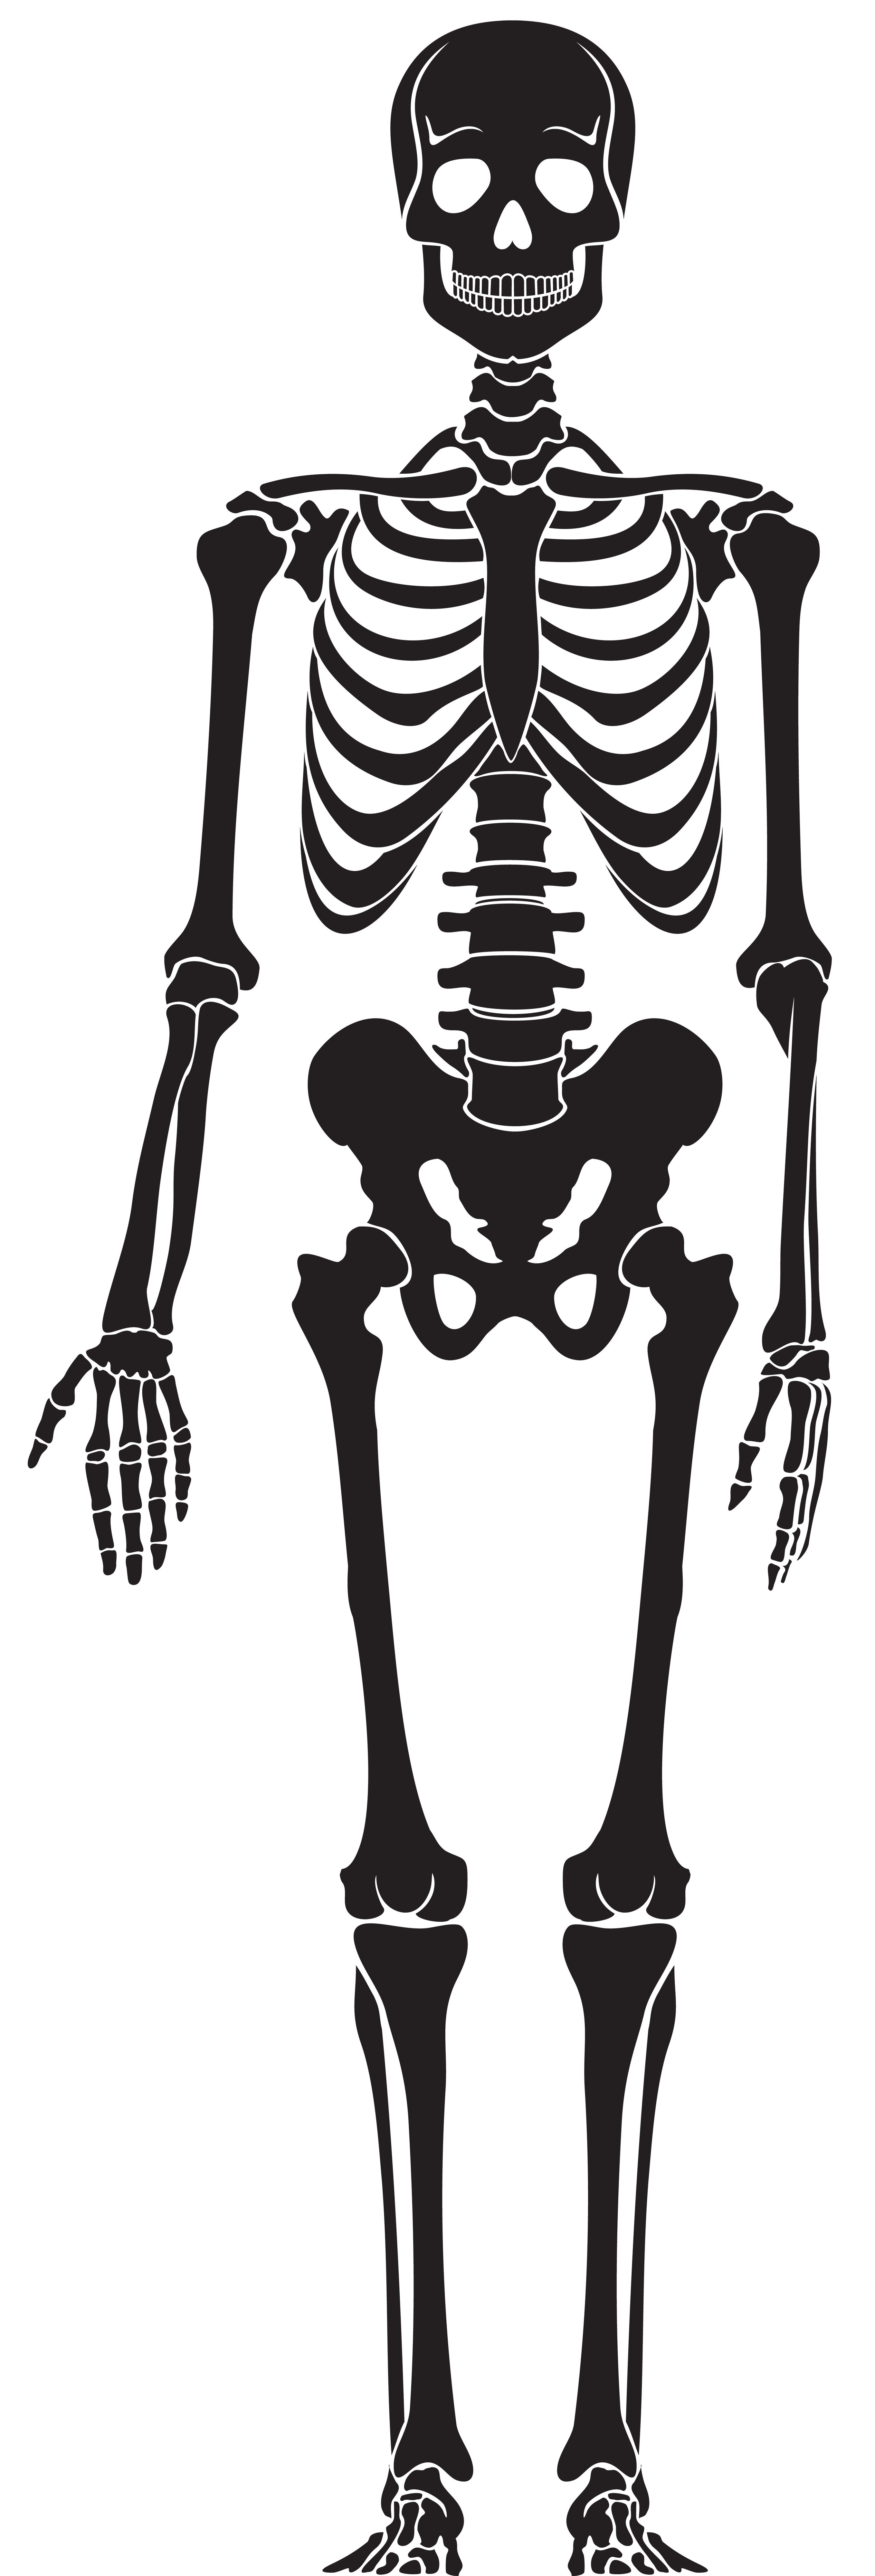 Vector Esqueleto Humano Png Clipart Humano Esqueleto Cuerpo Humano ...